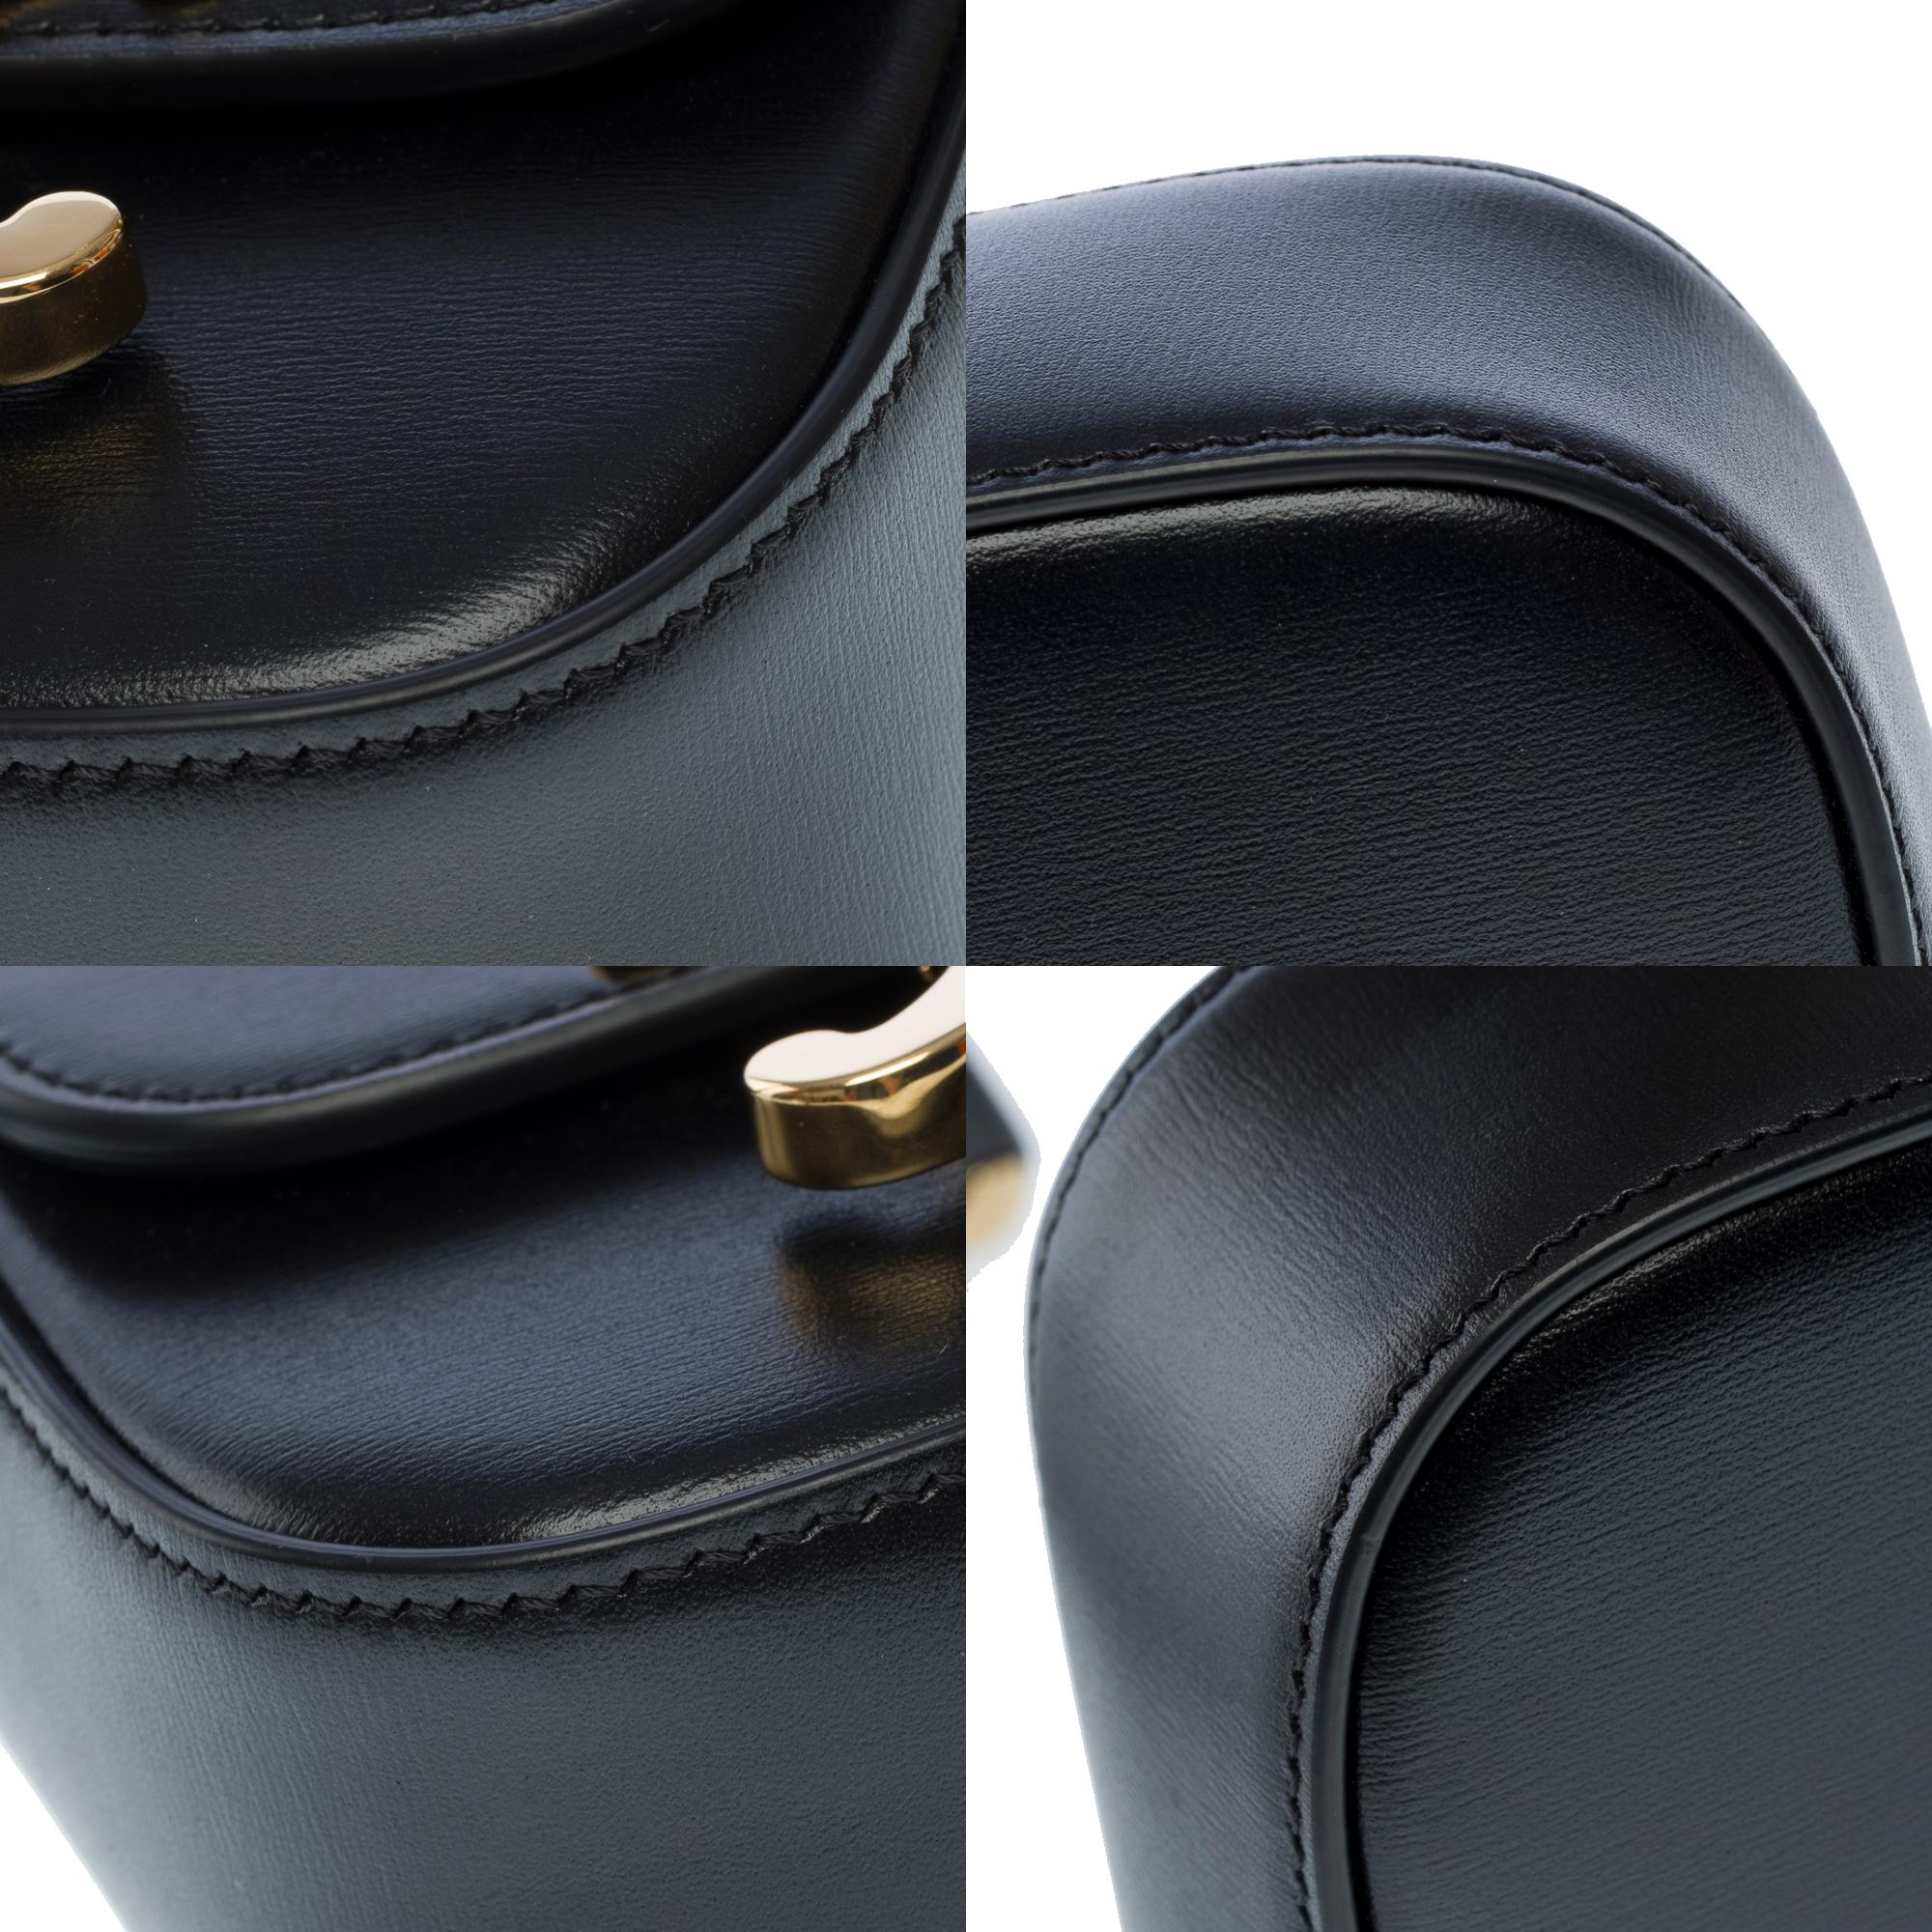 Celine Mini Triomphe shoulder flap bag in black box calf calf leather, GHW 7